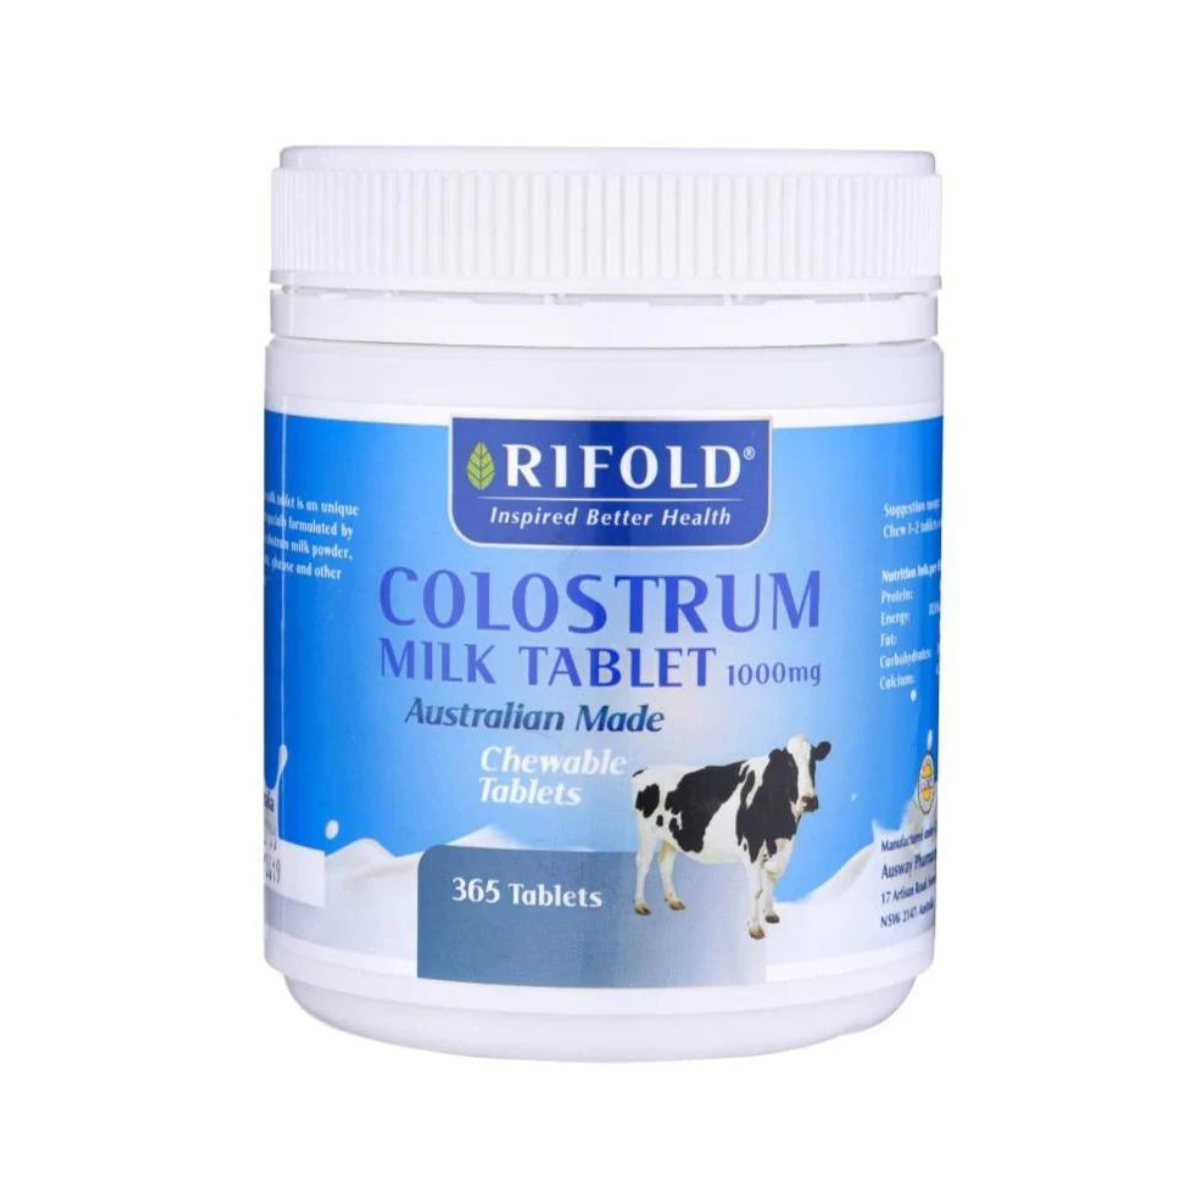 Colostrum Milk Tablet 1000mg 365 Tablets